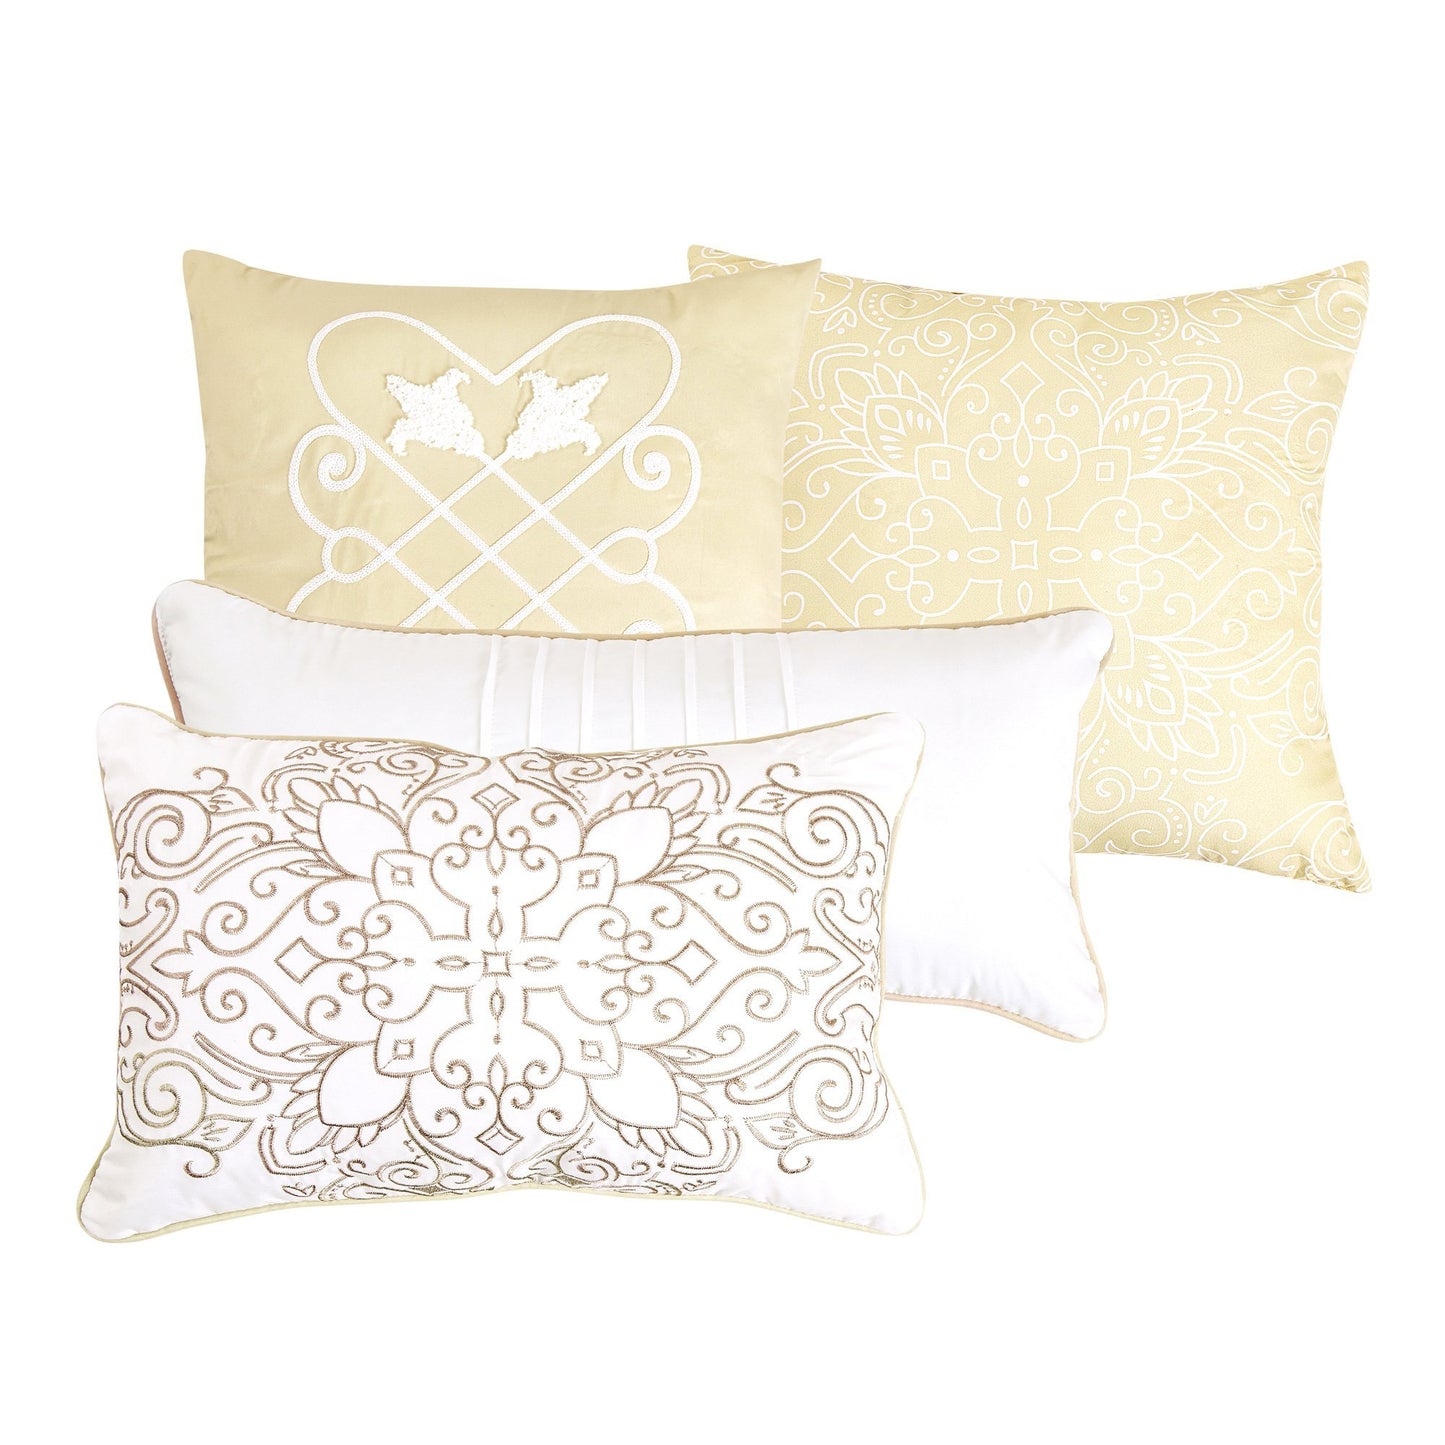 Mora Contemporary White and Gold Comforter Set - 7 Piece Set